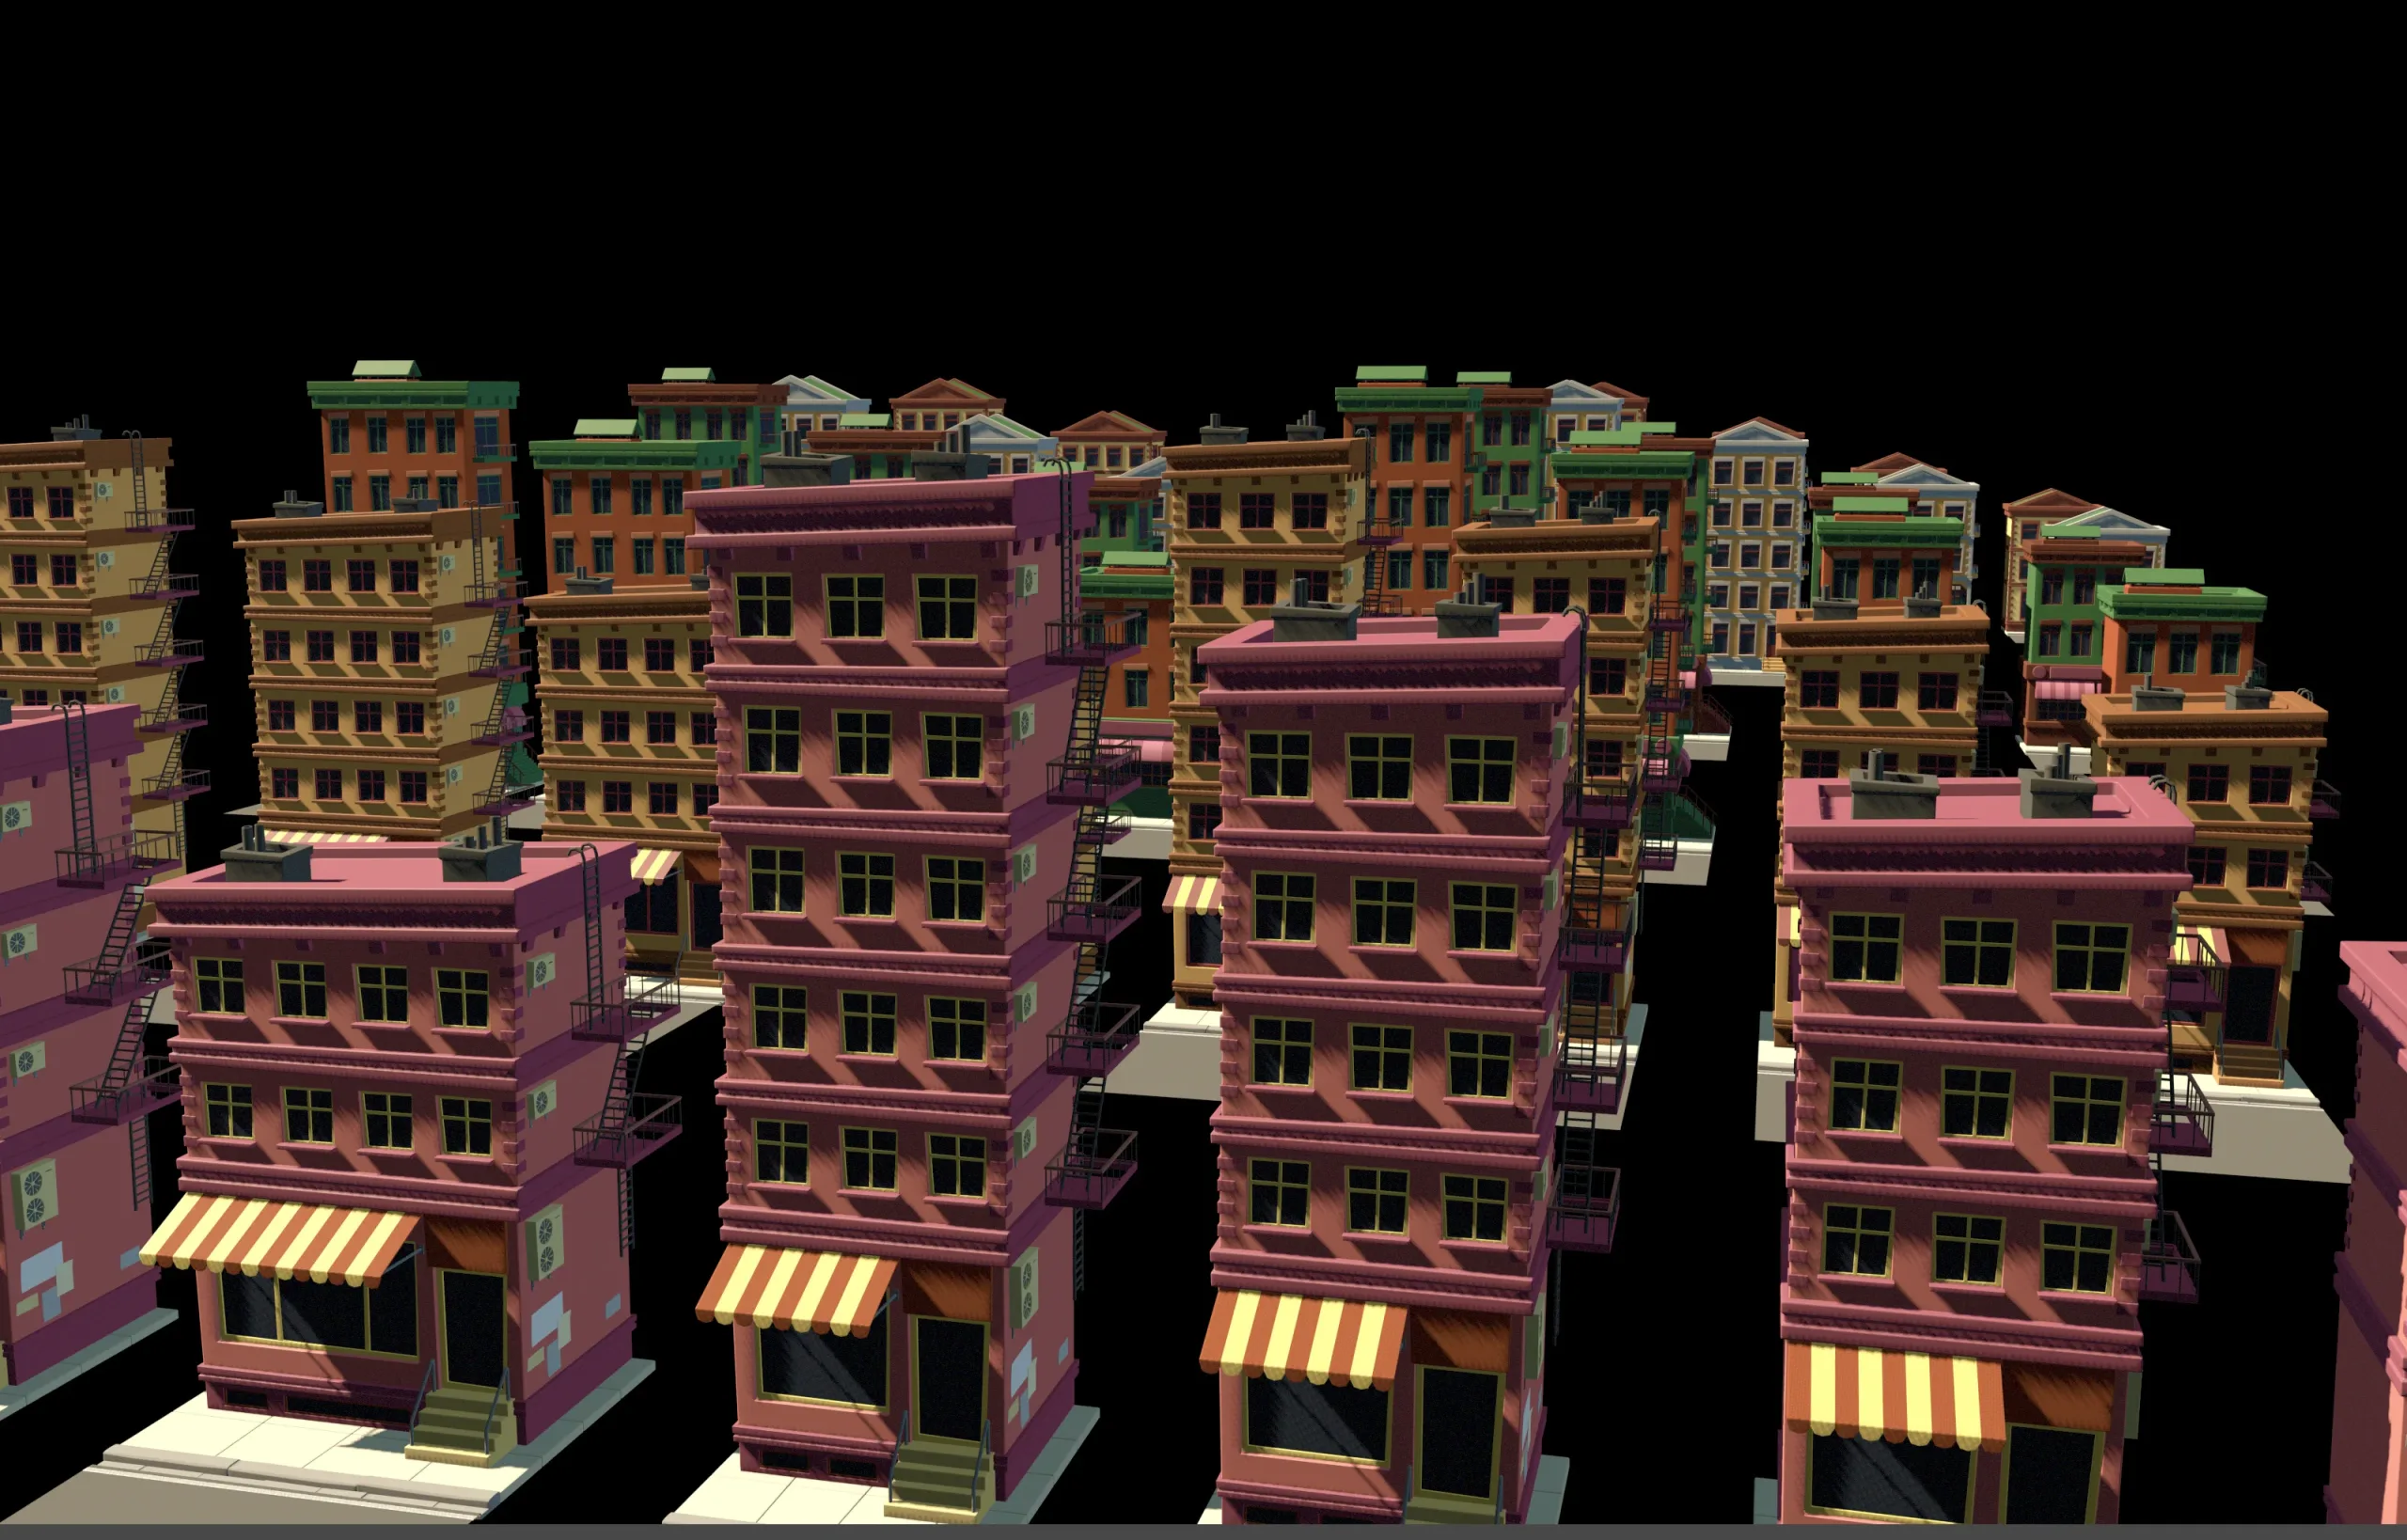 KITBASH buildings - 3D models